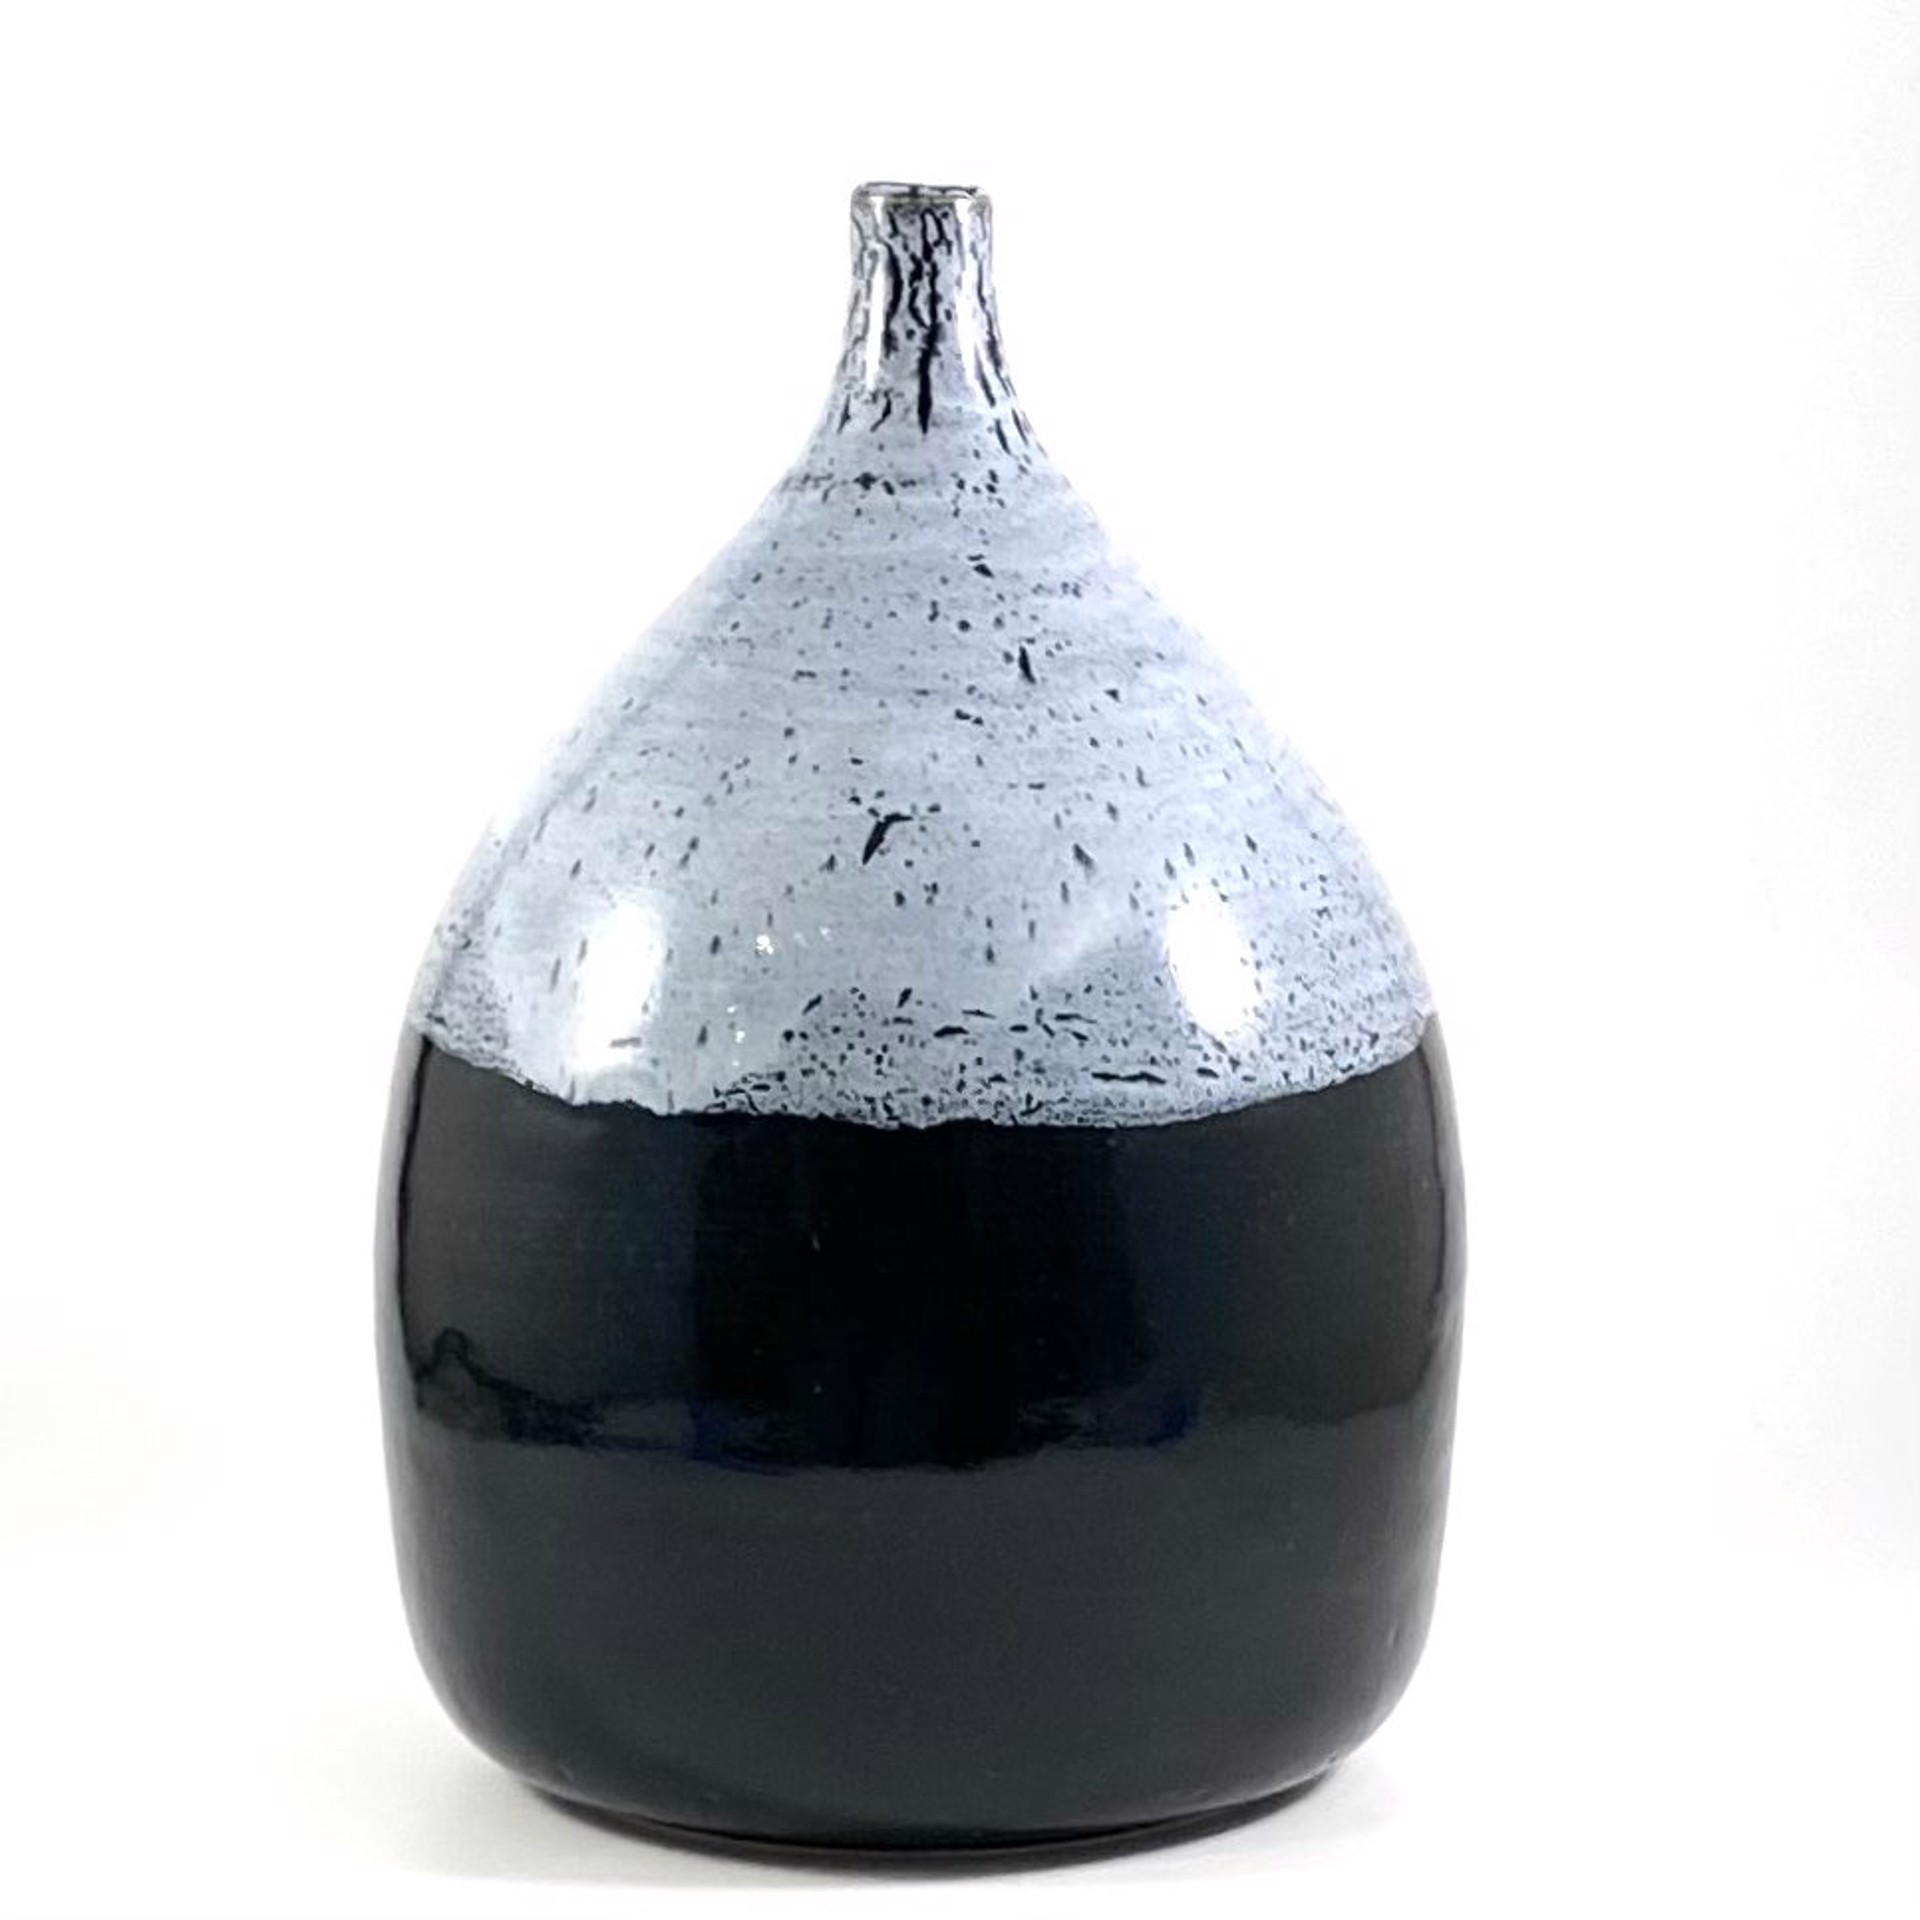 SB21-2 Black and White Teardrop Vase by Silas Bradley